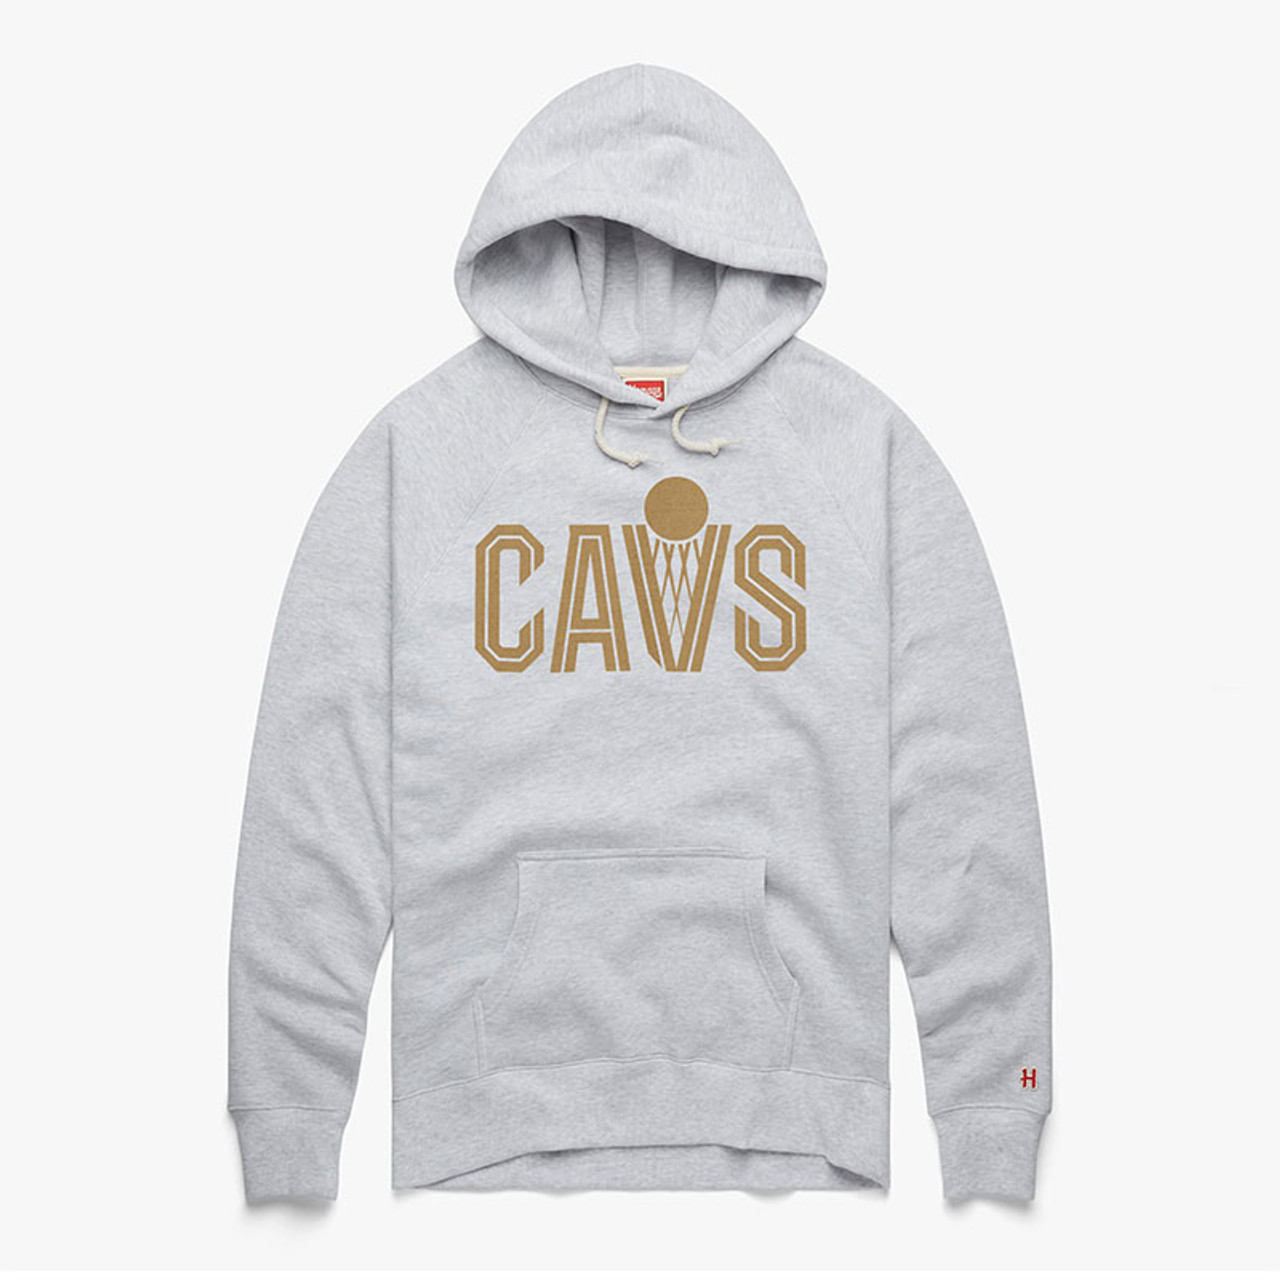 HOMAGE, Tops, Homage Cleveland Cavaliers Cavs Sweatshirt S